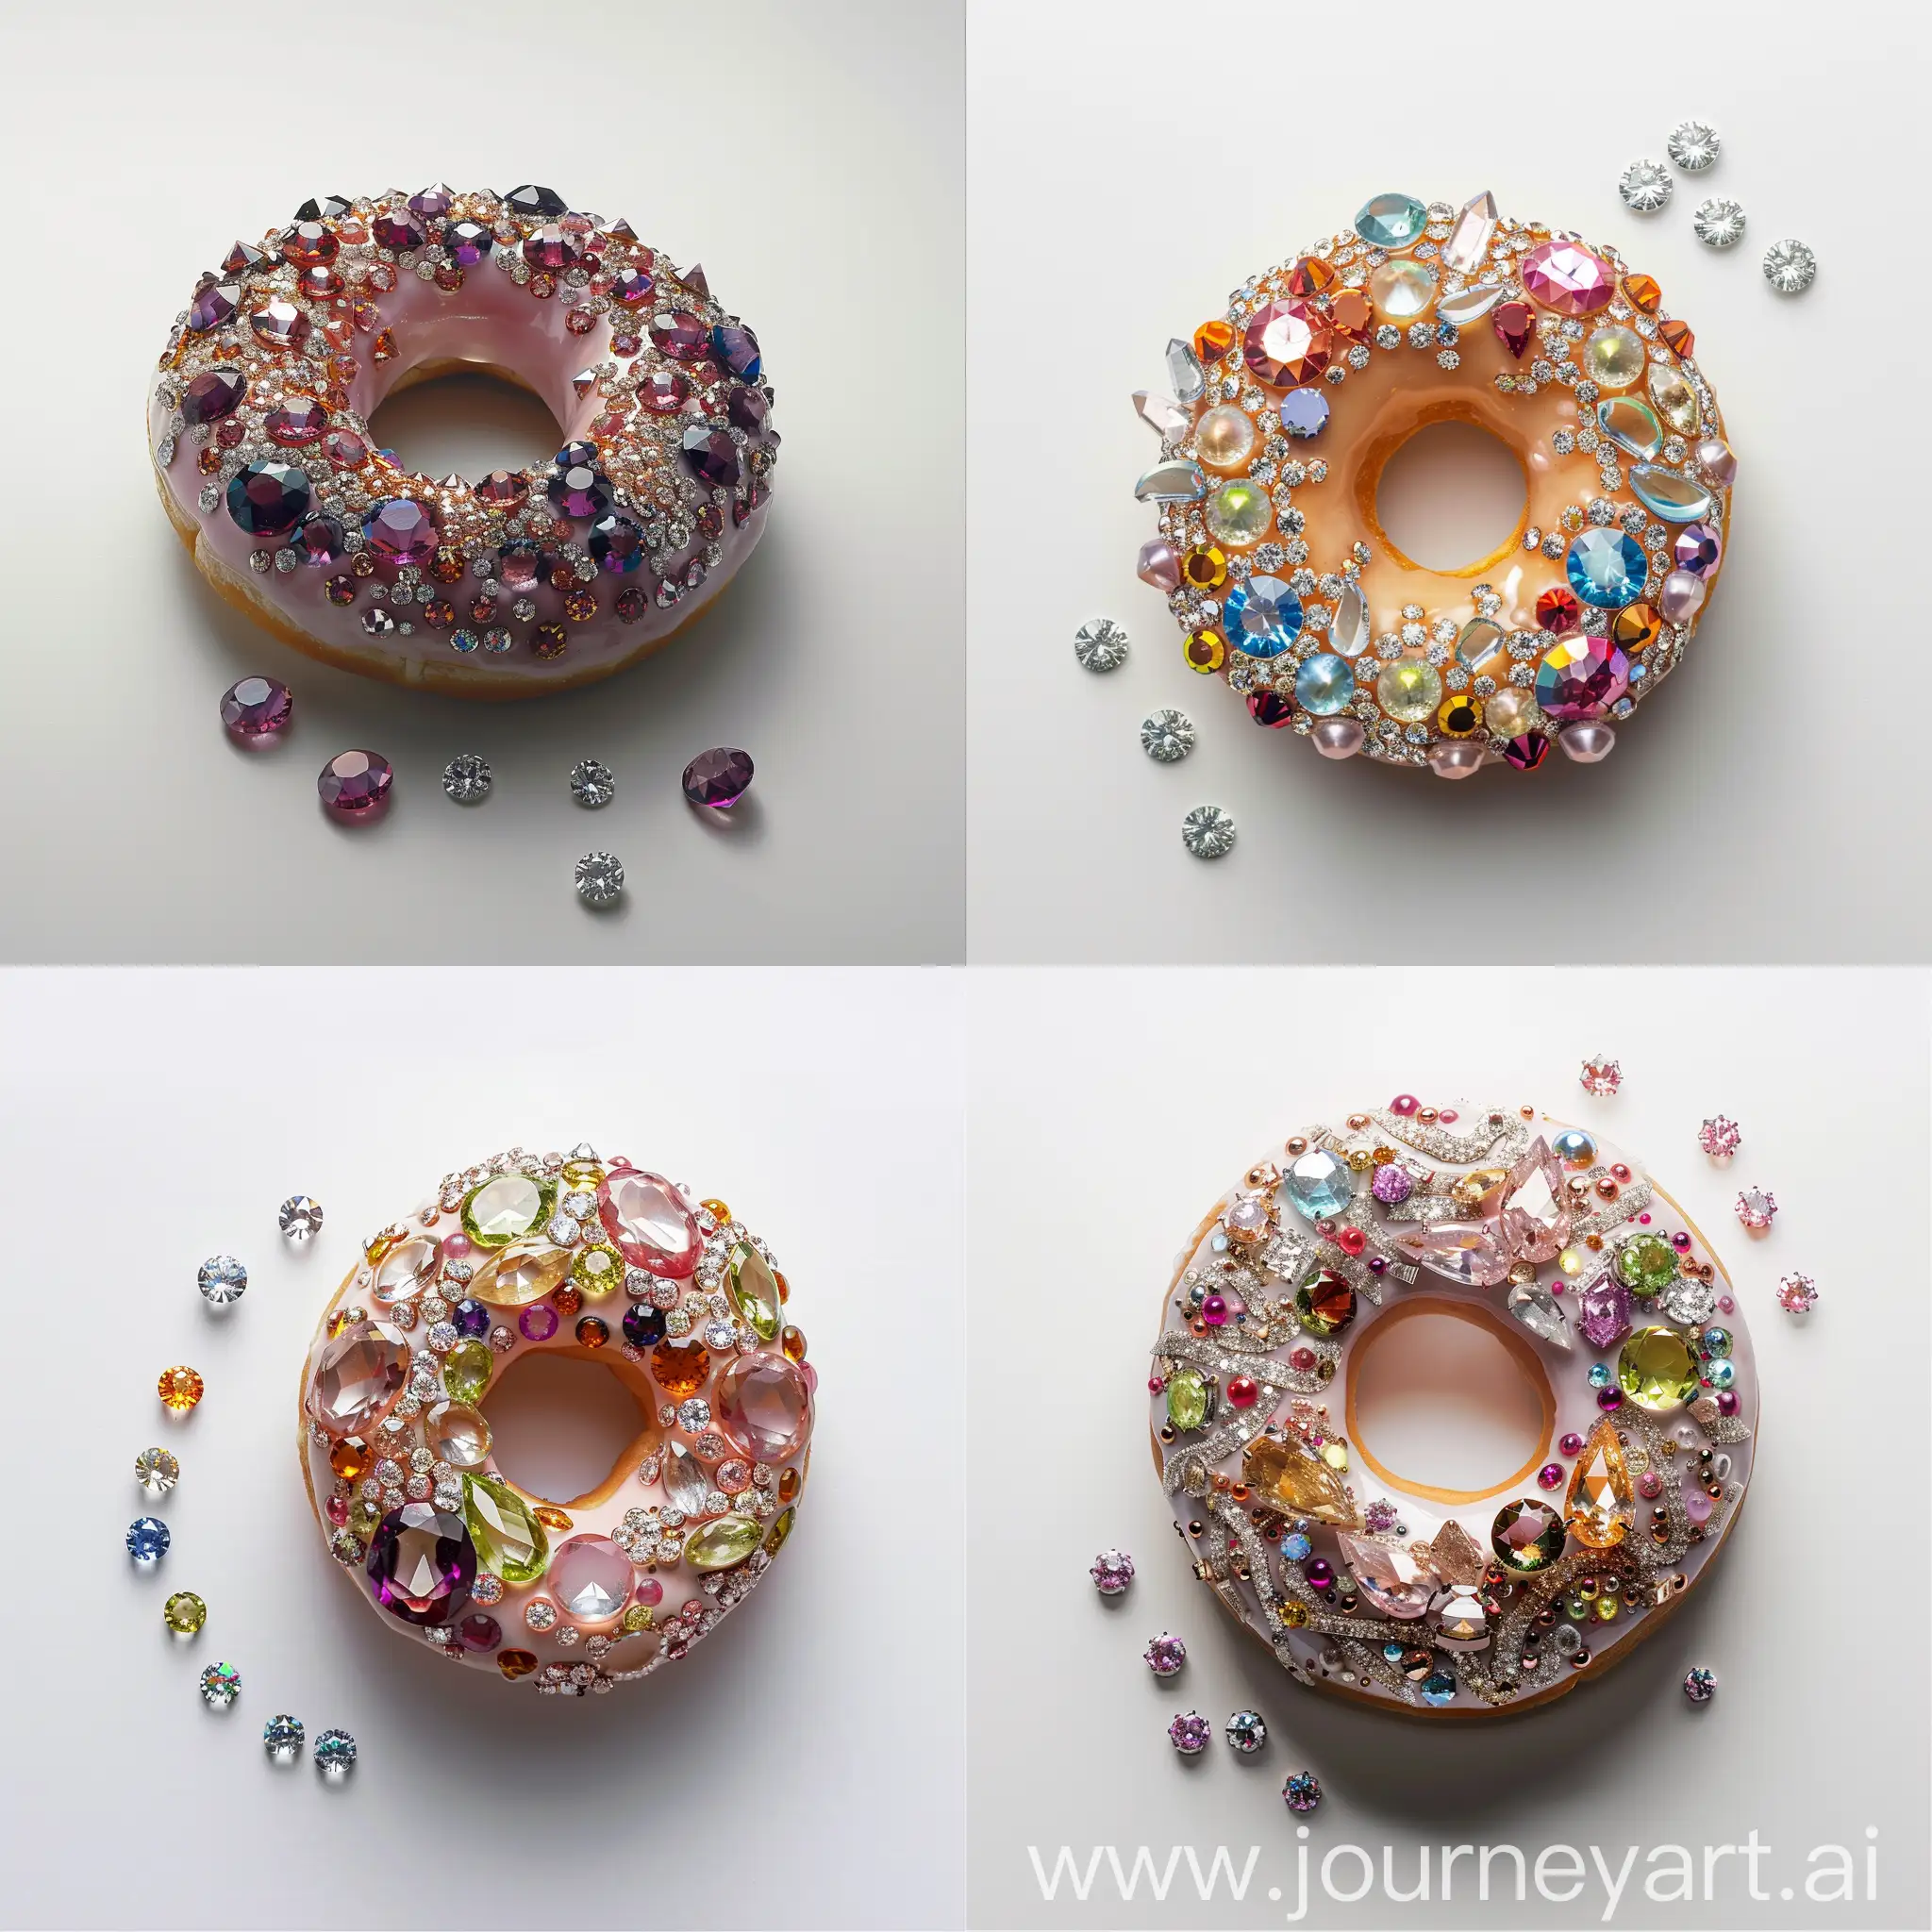 Luxurious-GemstoneAdorned-Donut-with-Diamonds-on-White-Background